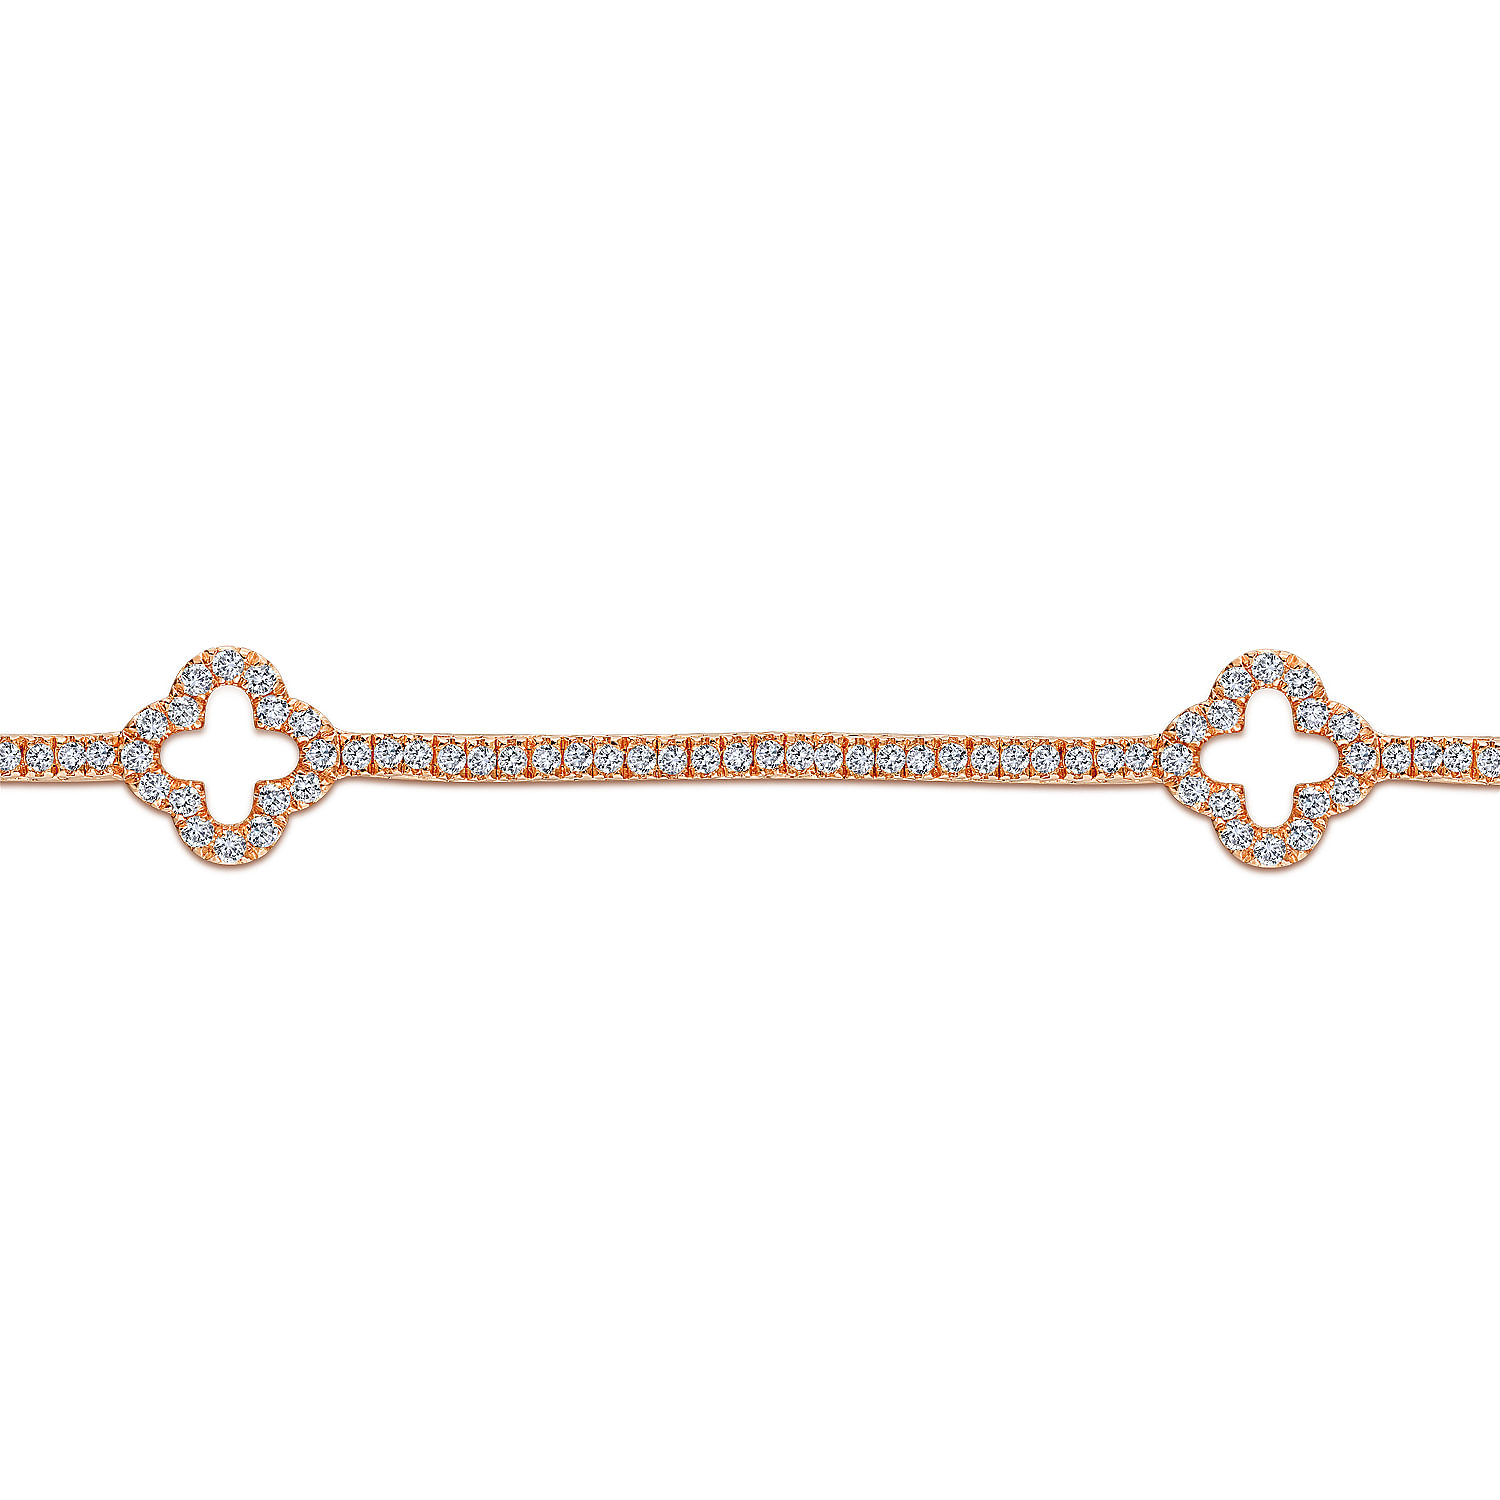 14K Rose Gold Diamond Tennis Bracelet with Clover Stations